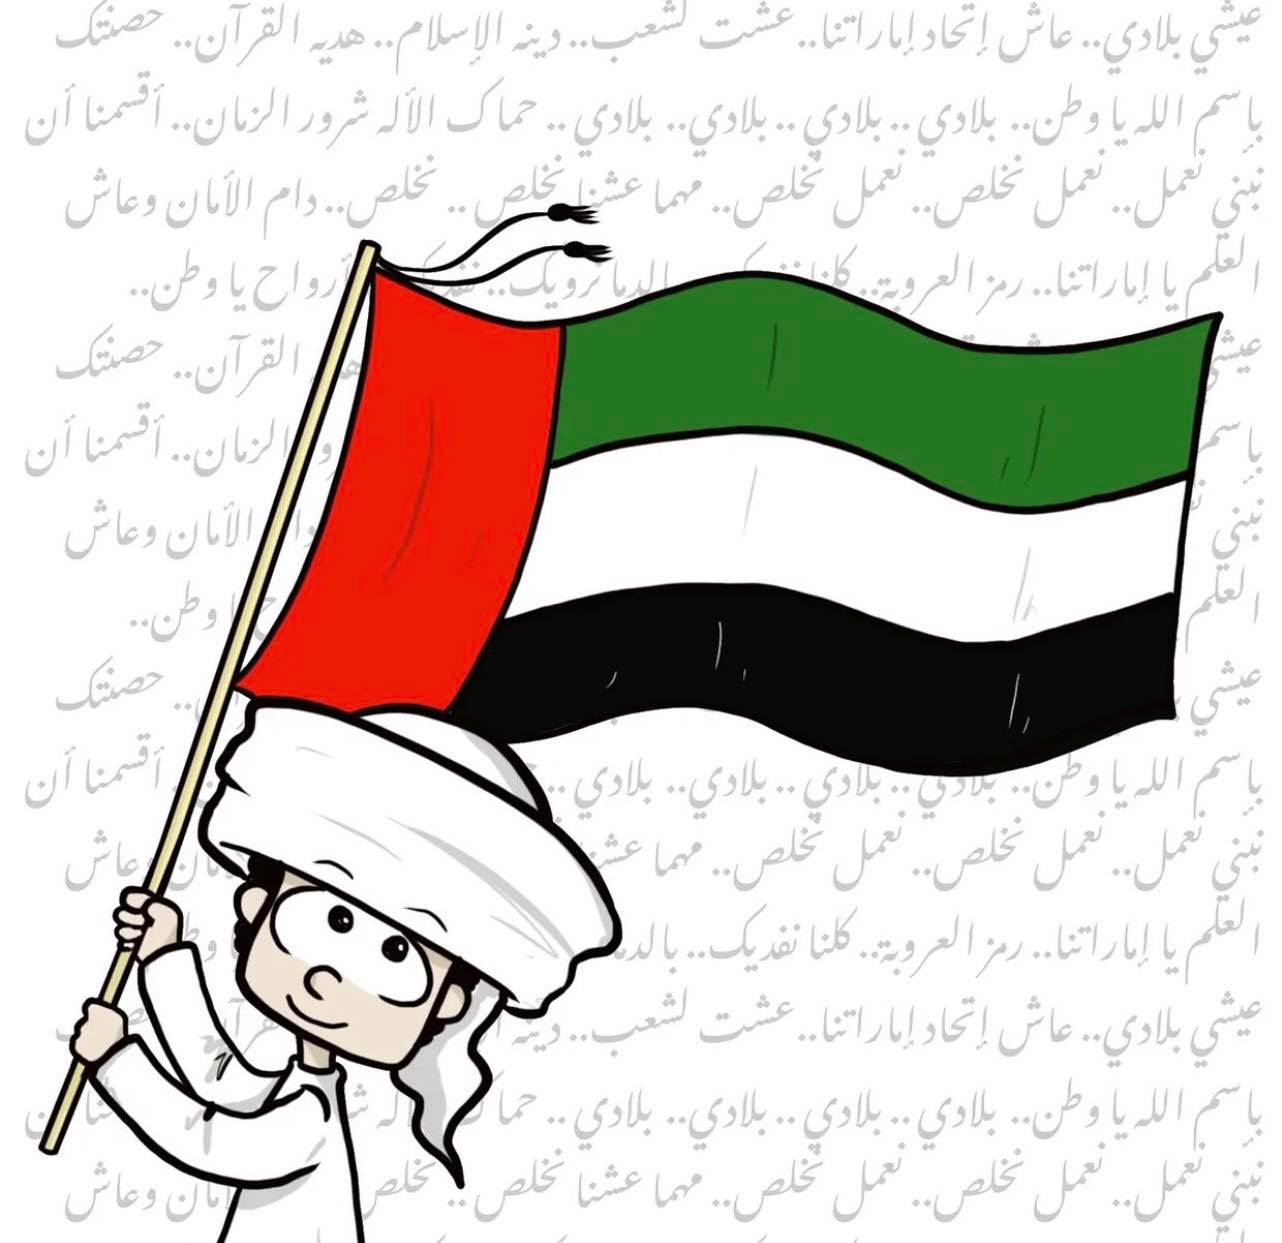 UAE NAtional Day by Emirati artist Khaled al Jaberi